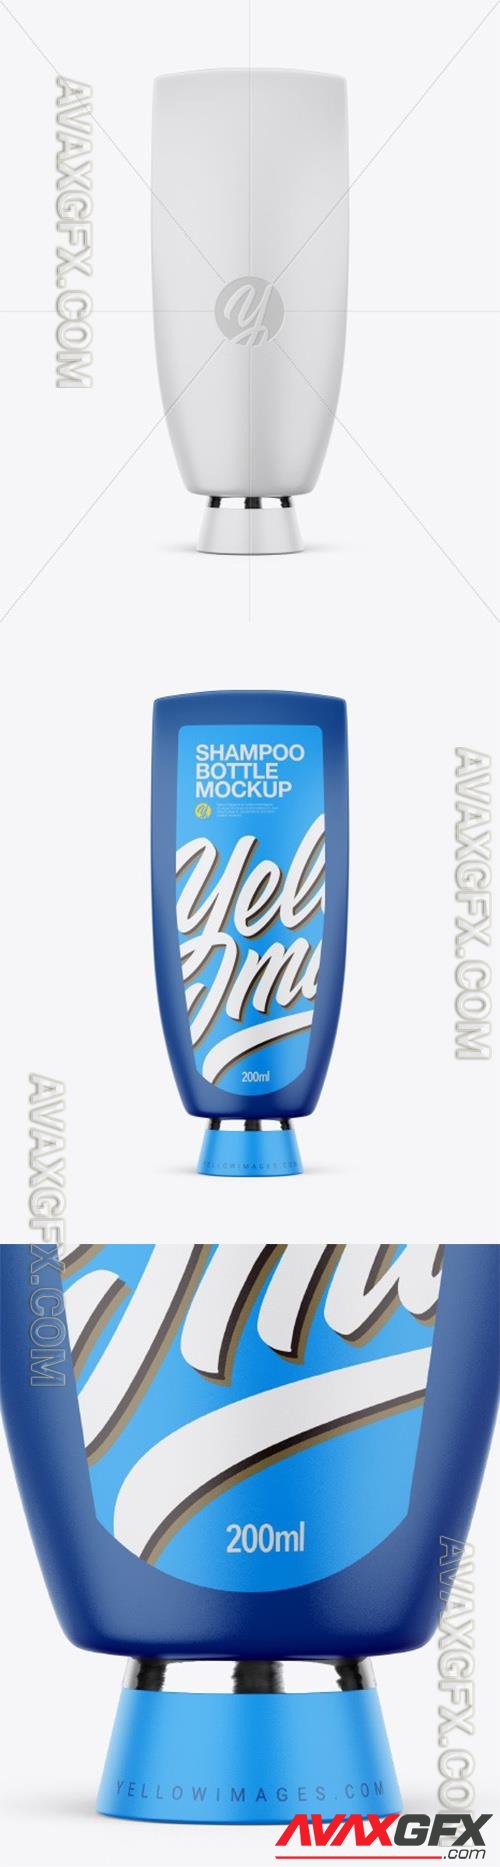 Shampoo Matte Bottle Mockup 47538 TIF